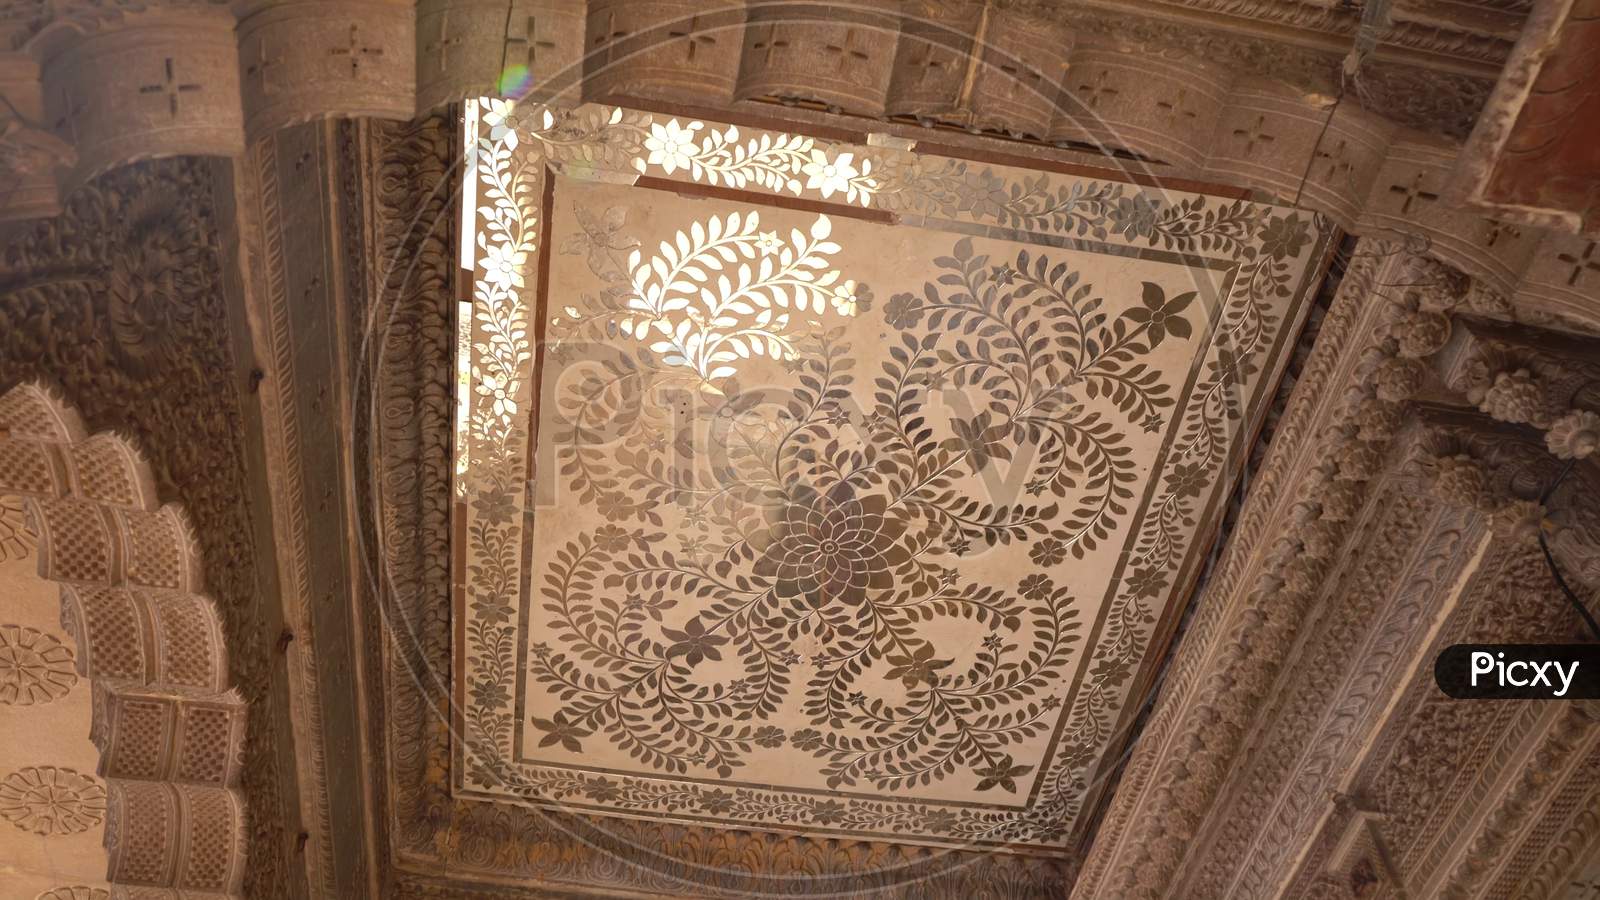 BEAUTIFUL DESIGN AT PALACE IN RAJASTHAN